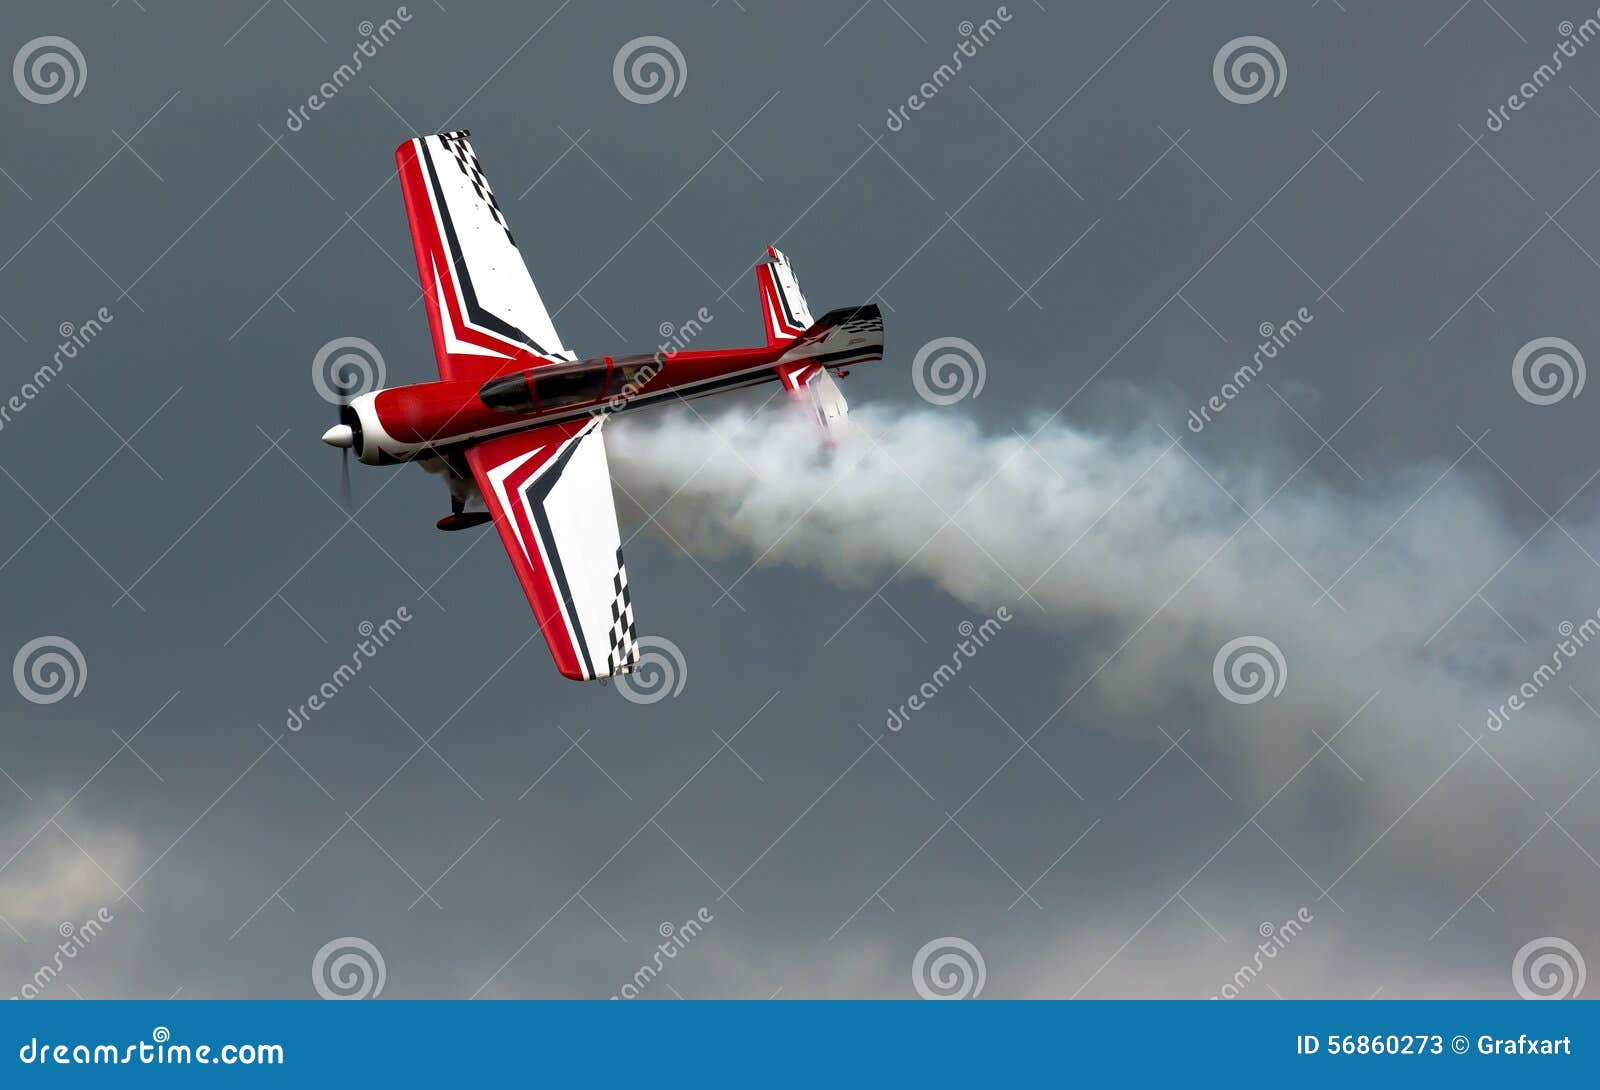 aerobatics with smoke